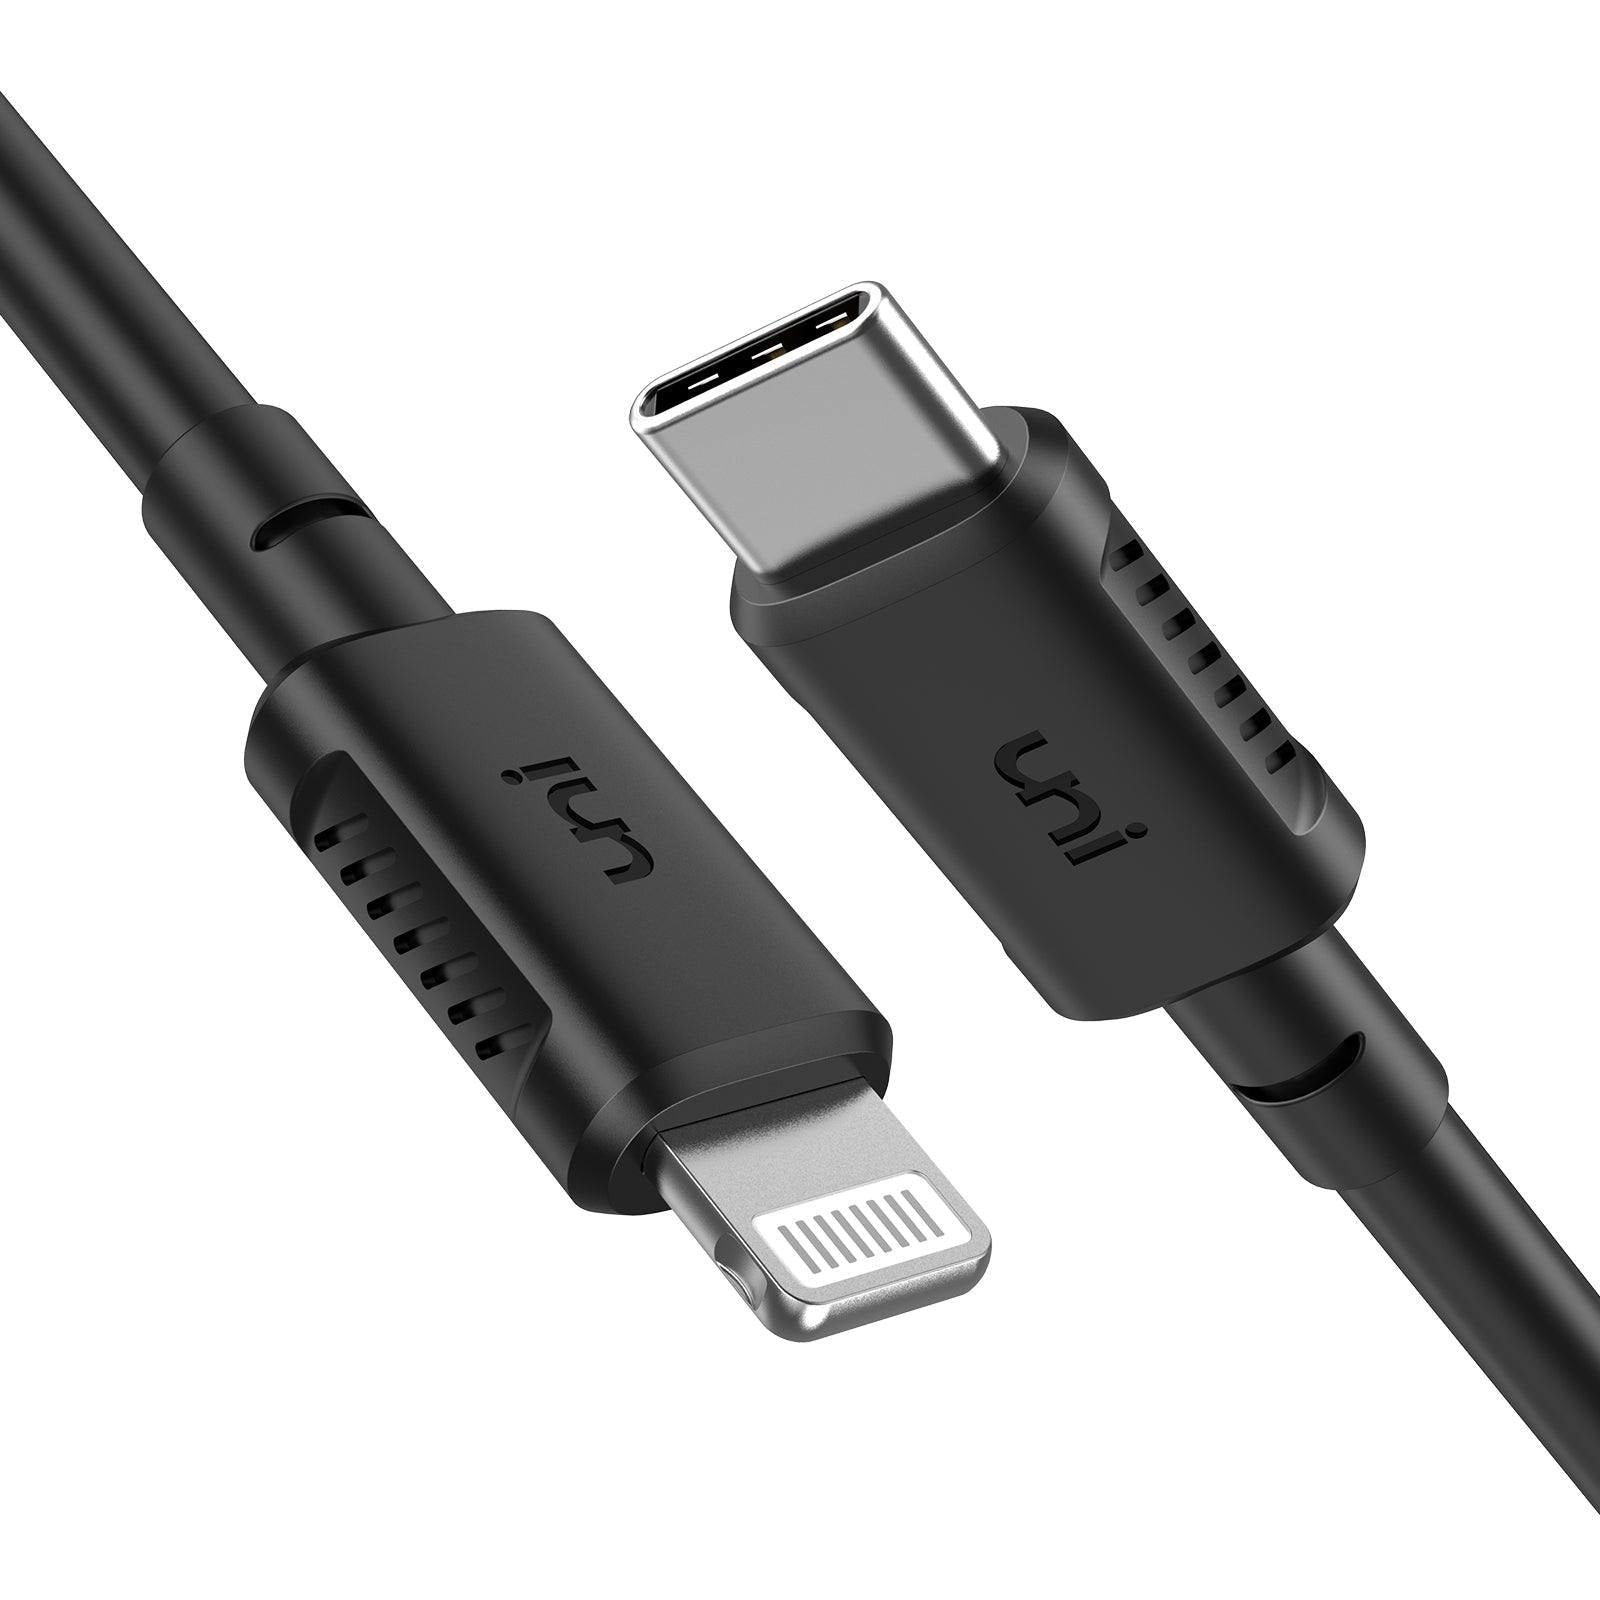 Cable de carga ultrarrápido USB C, cable USB C de Apple iPhone